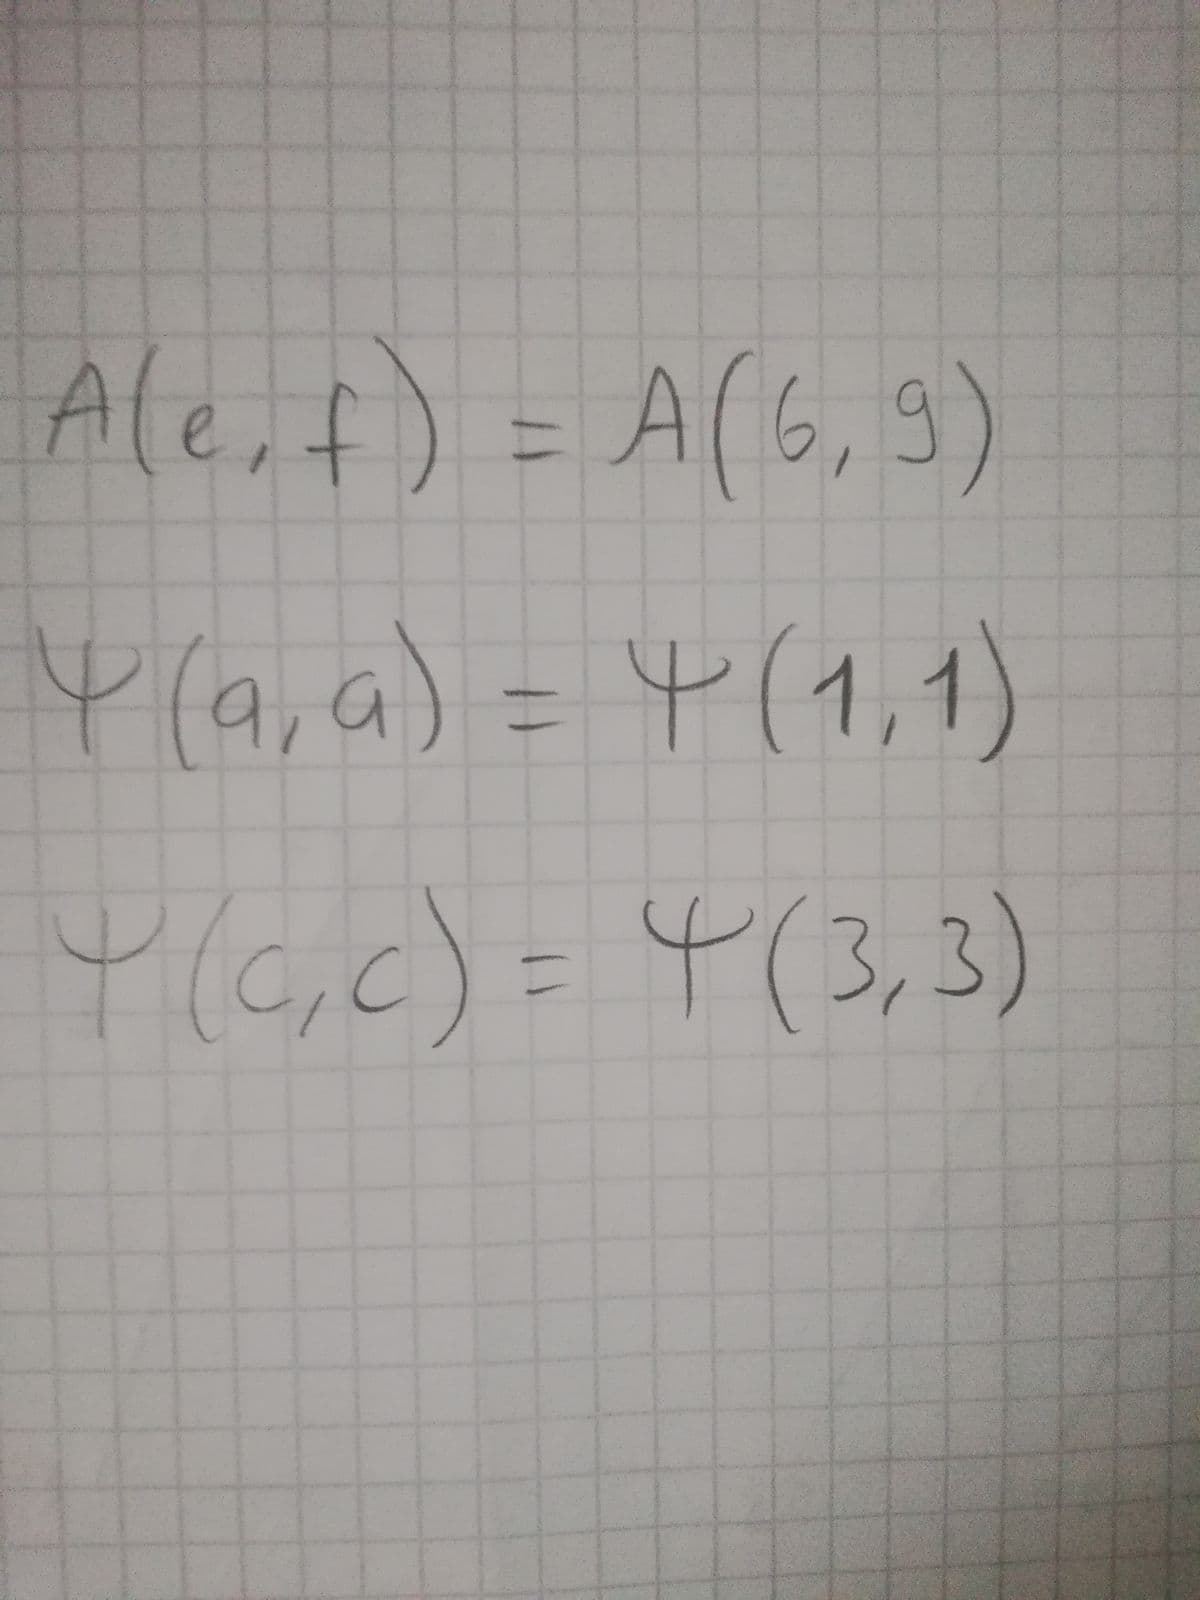 Ale, f) = A(6,9)
to
%1
4 (a, a) = 4(1,1)
Y(G,c)= 4(3,3)
11
